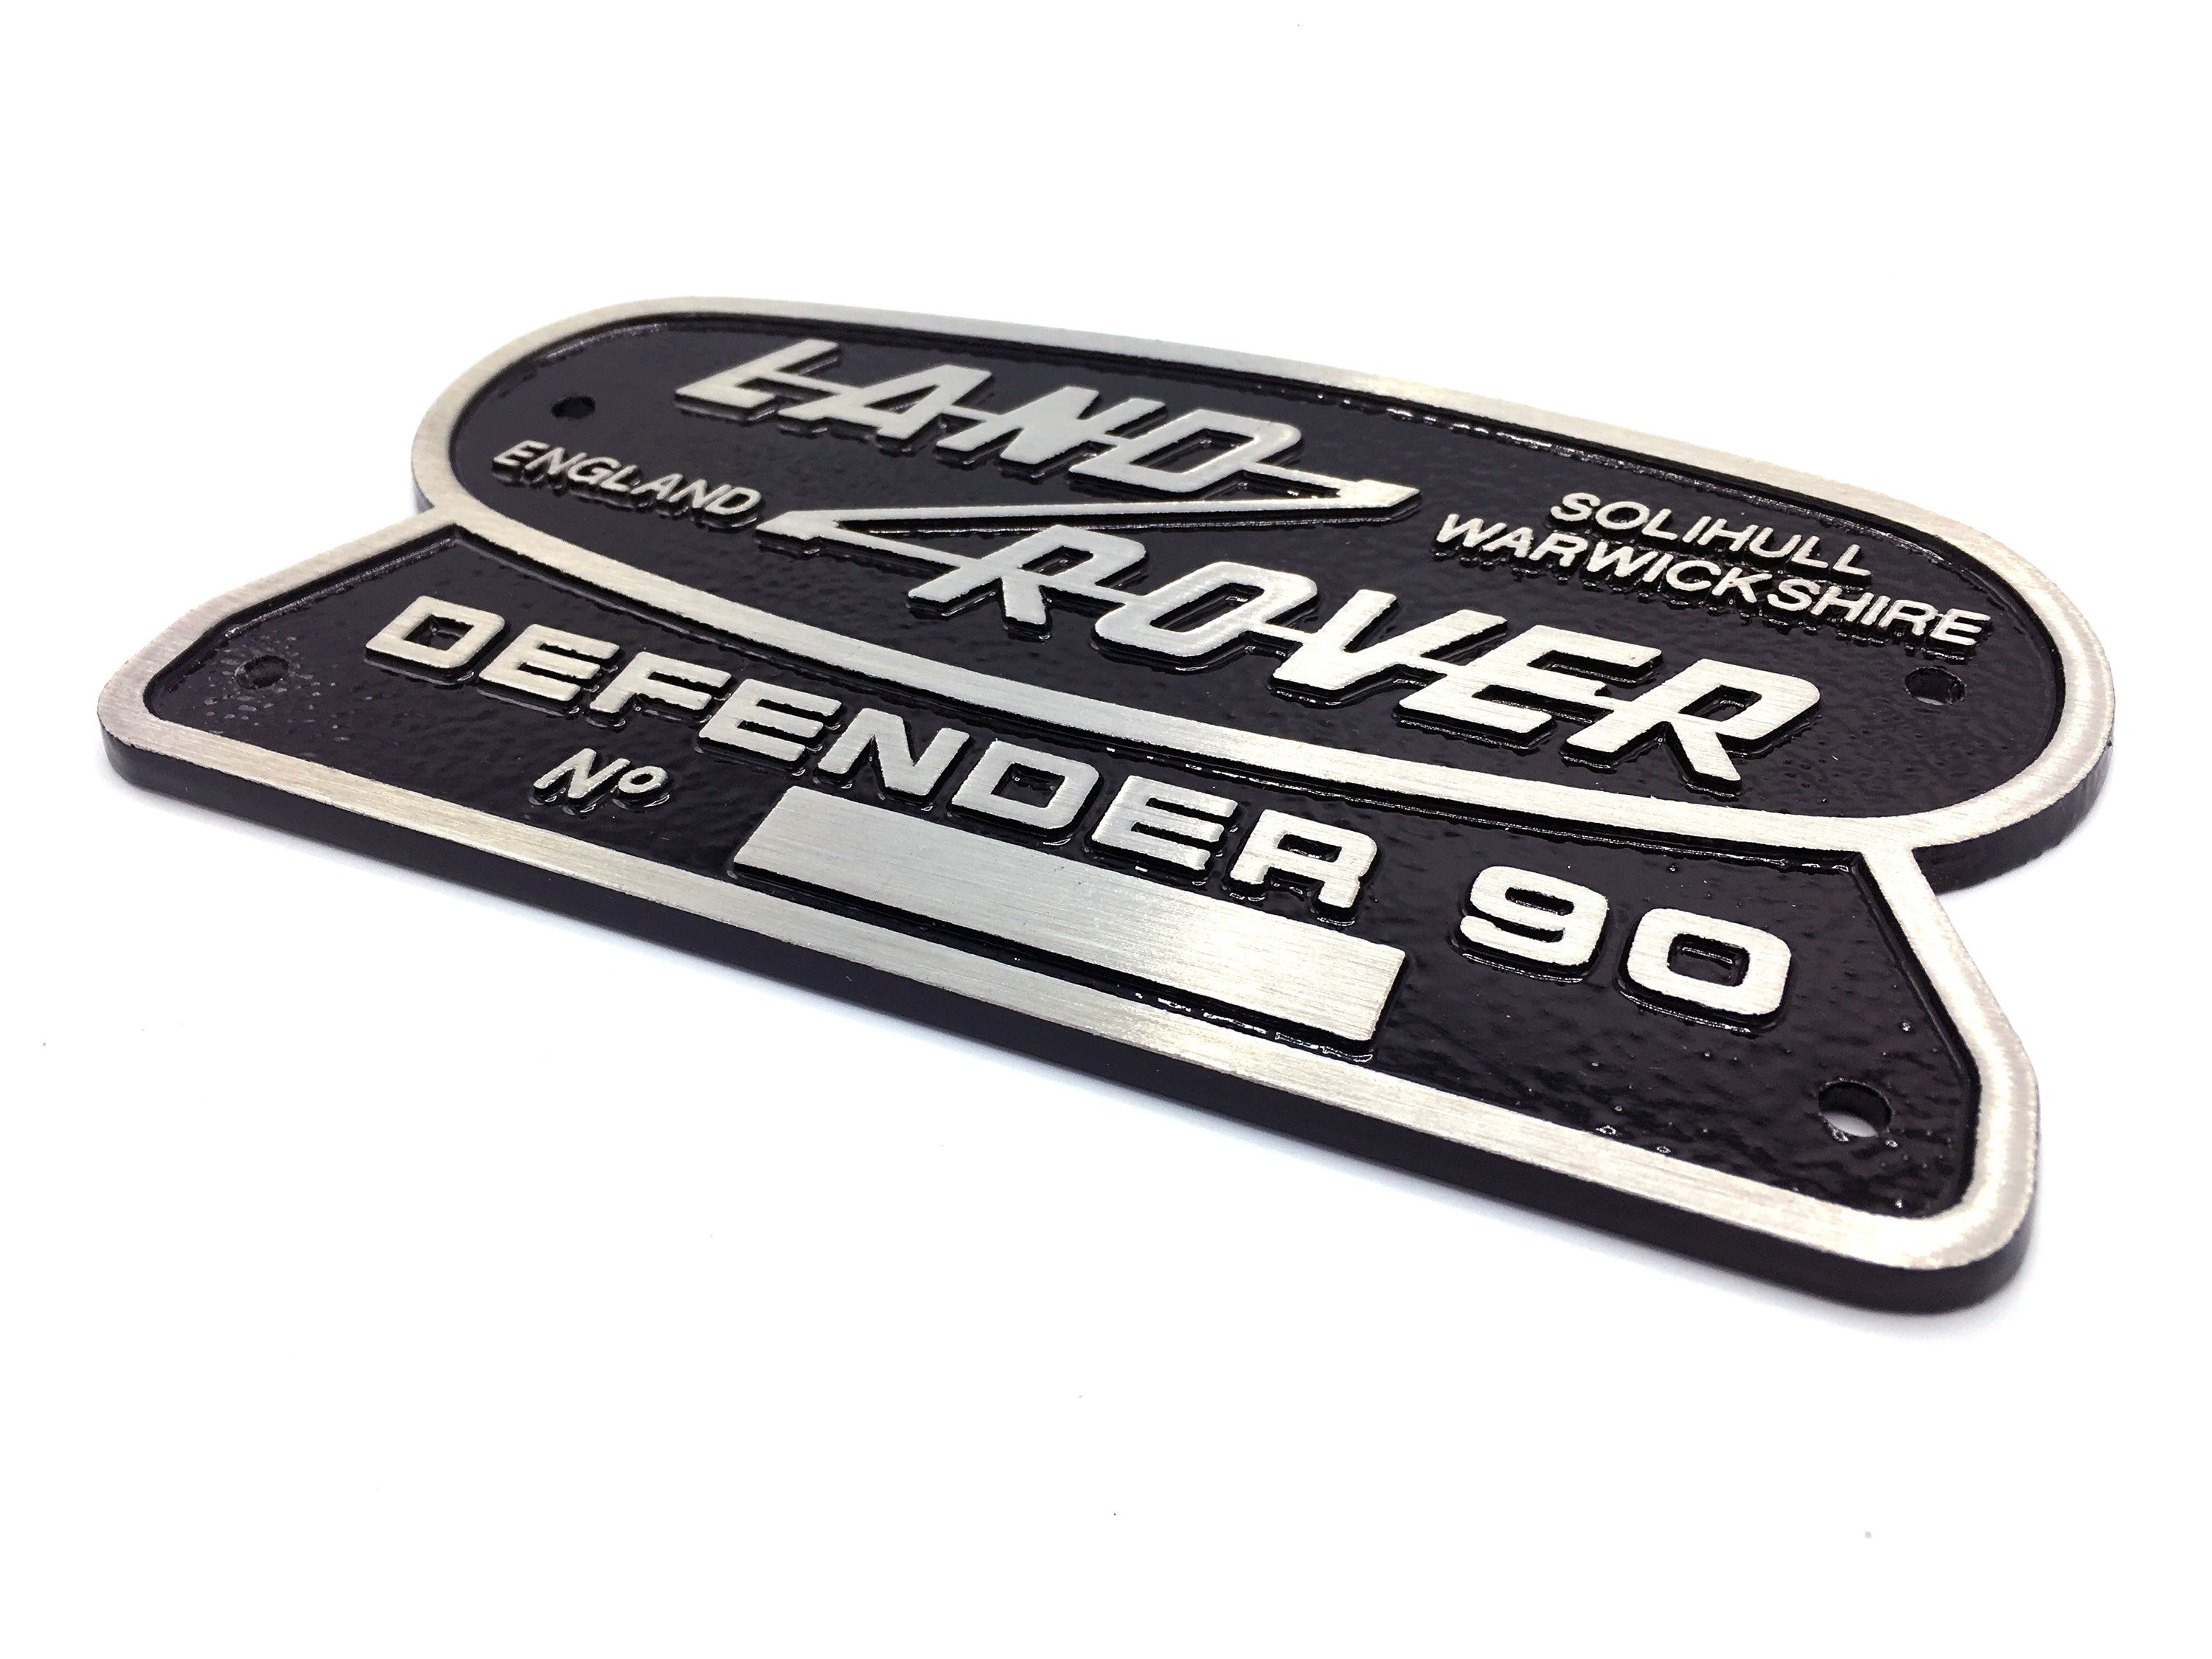 "Land Rover 90" Oval Badge (Cast Aluminum)